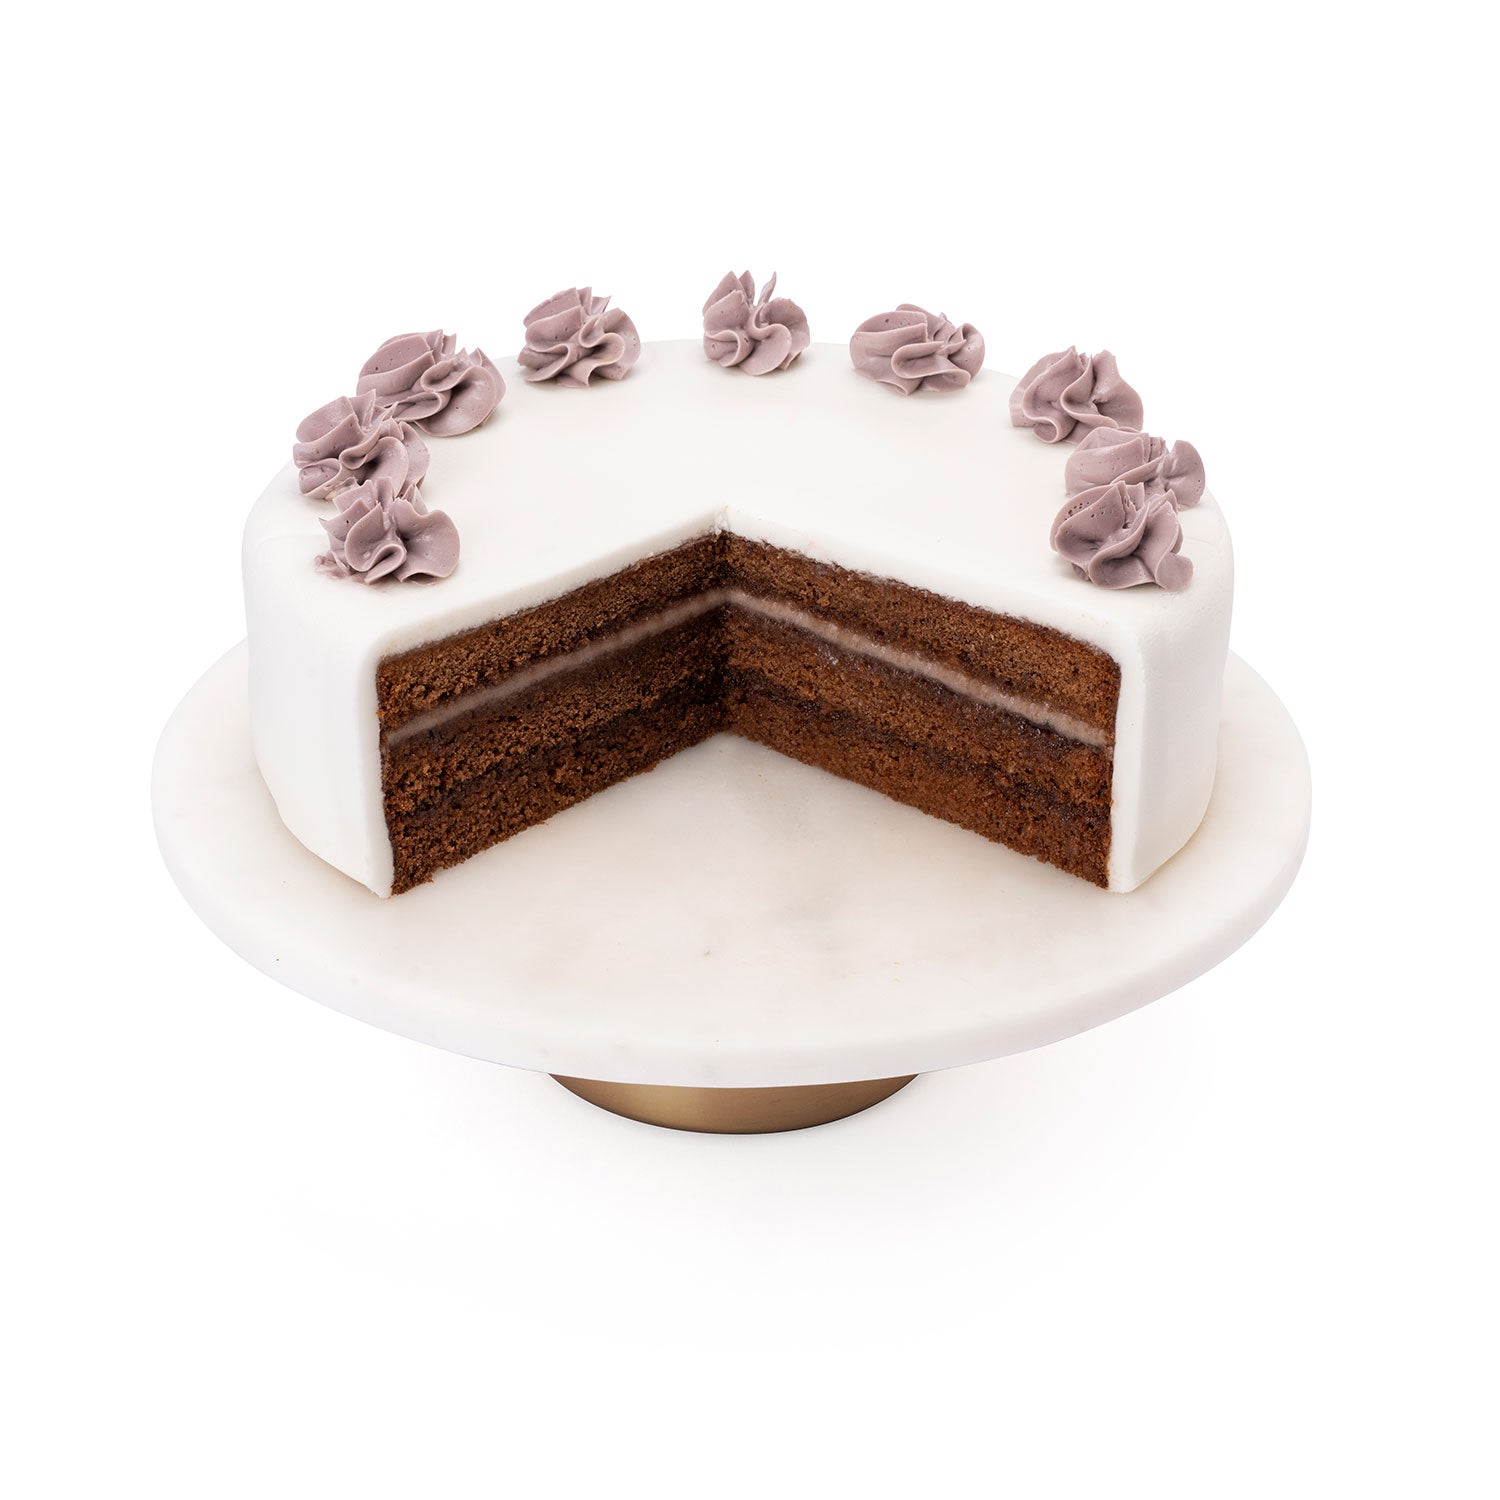 cakes-base-marble-sissi-2-web.jpg